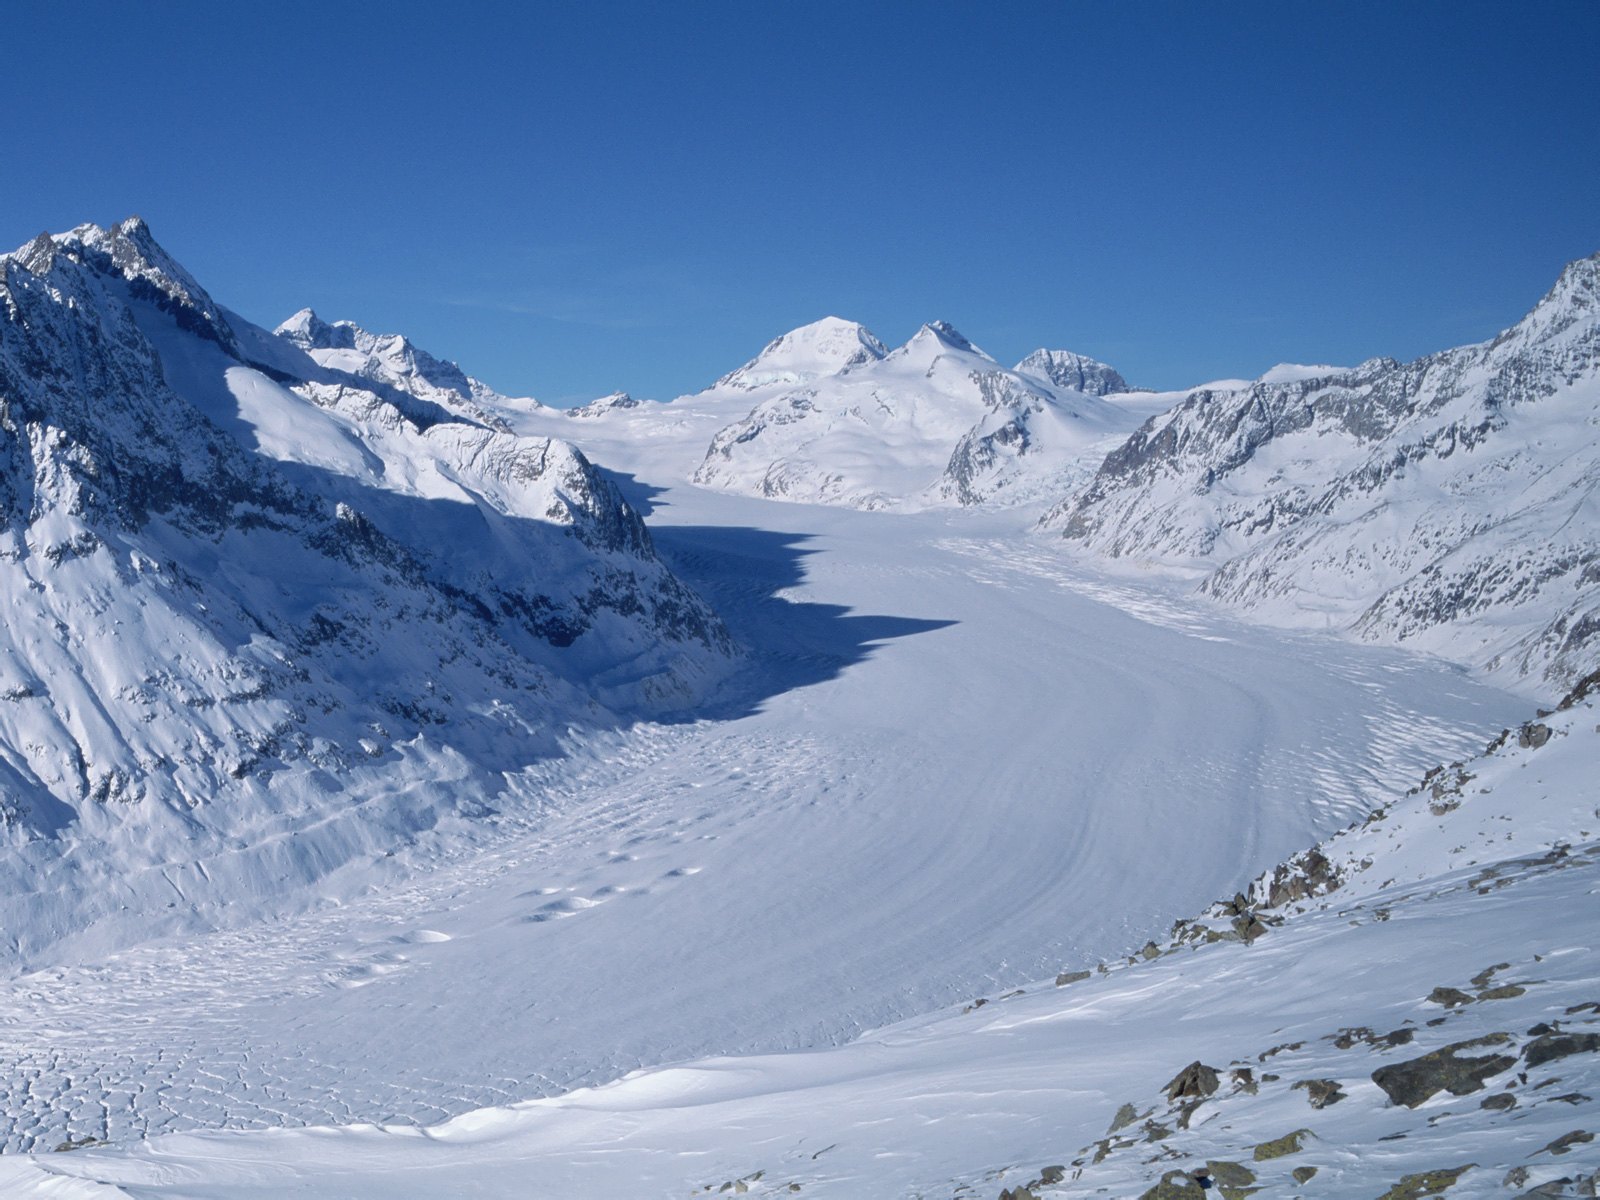 Previous, Winter - Switzerland Snow wallpaper